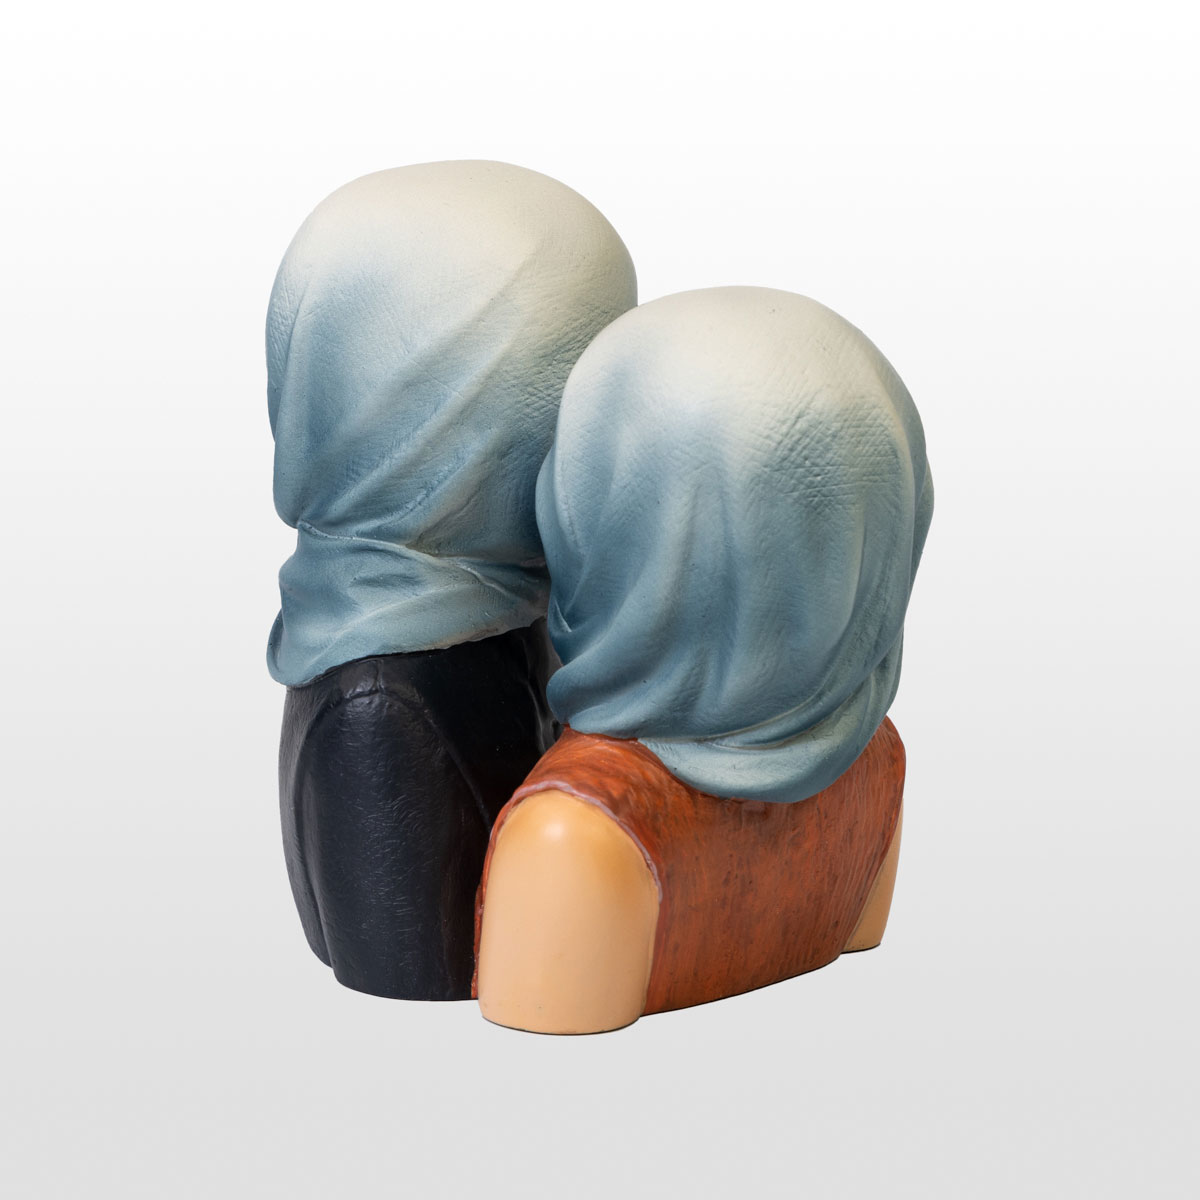 René Magritte figurine : The lovers (detail n°3)